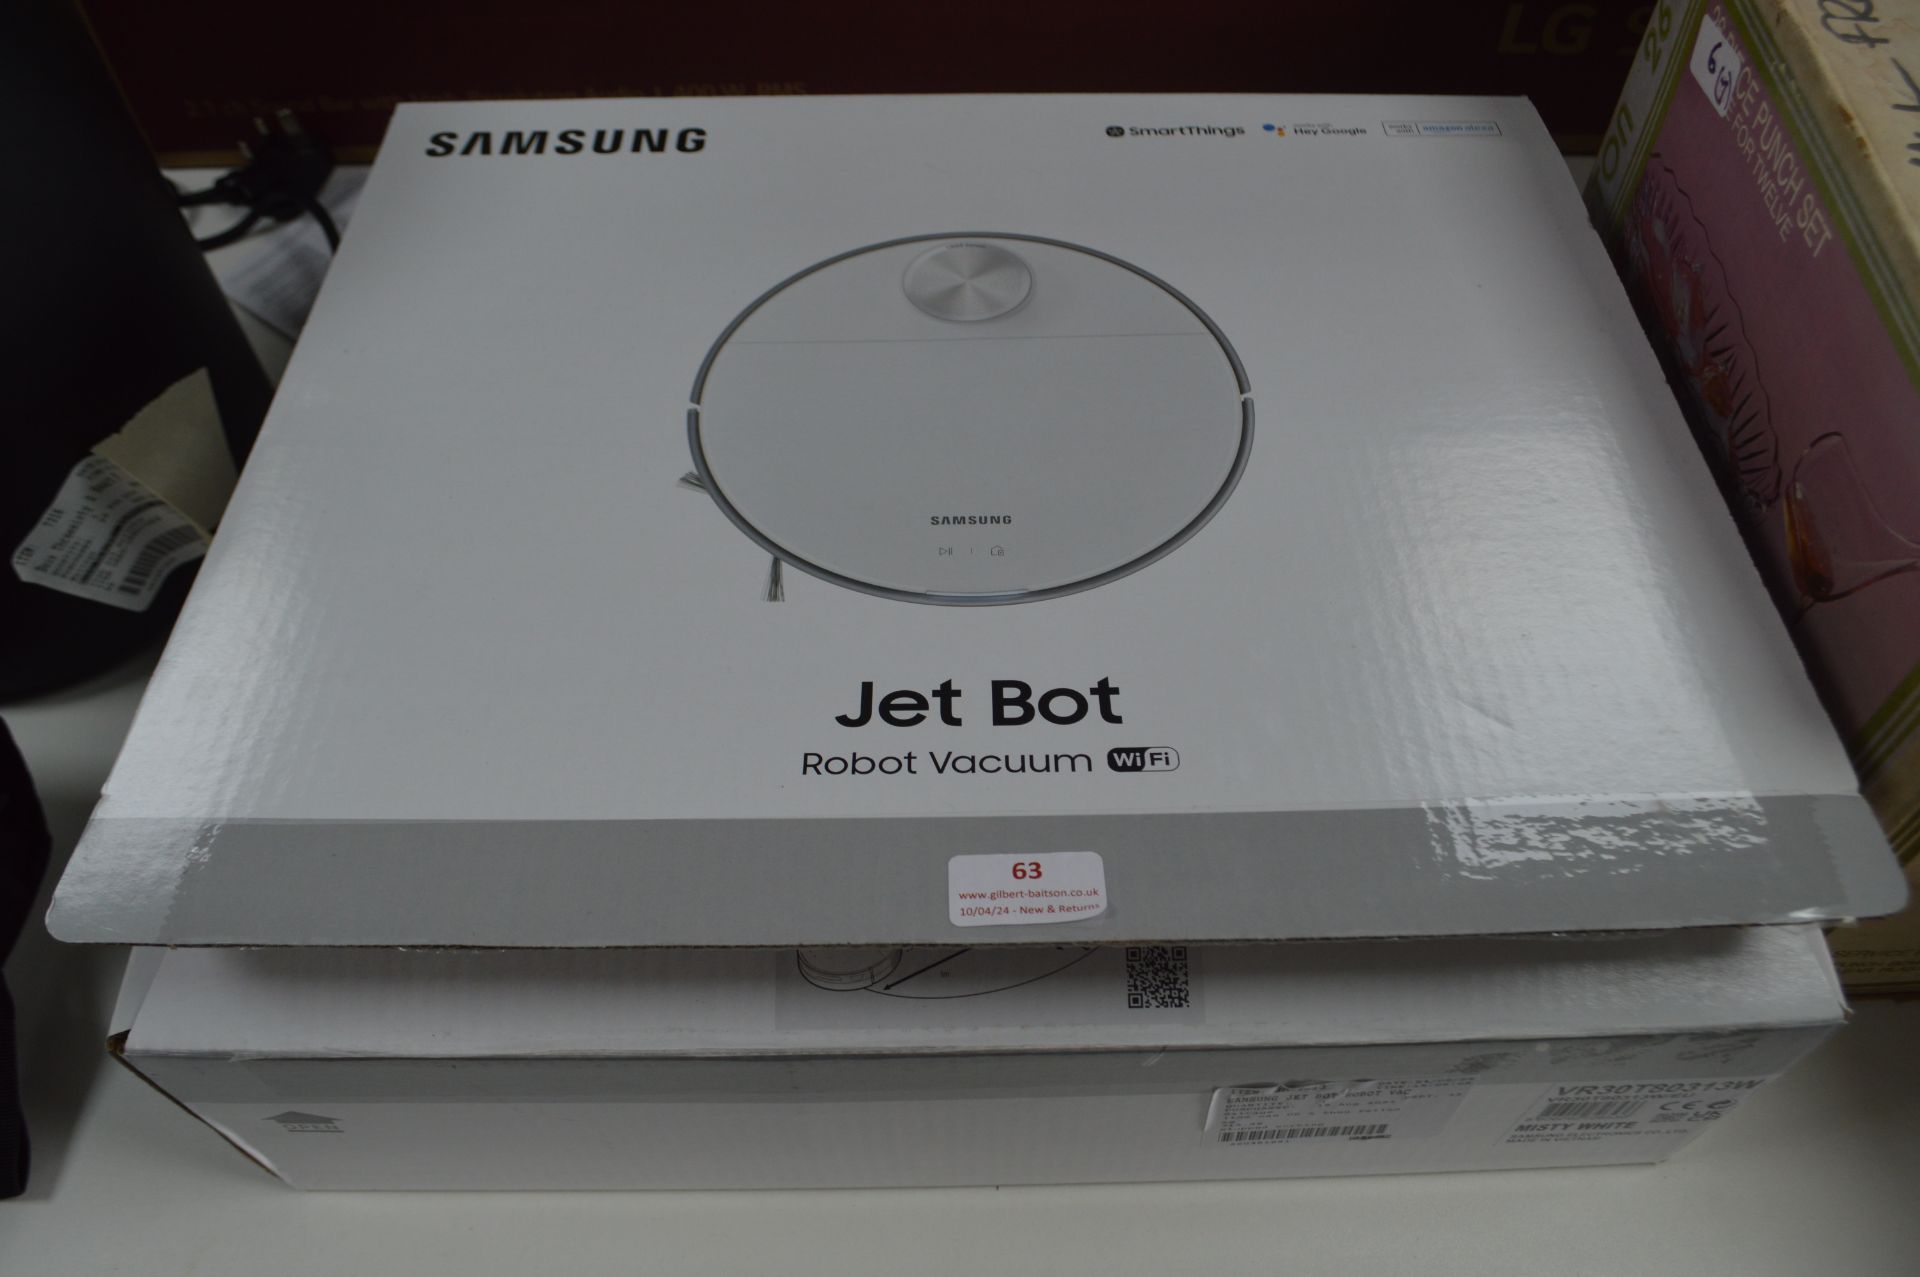 *Samsung JetBot Robot Vacuum Cleaner